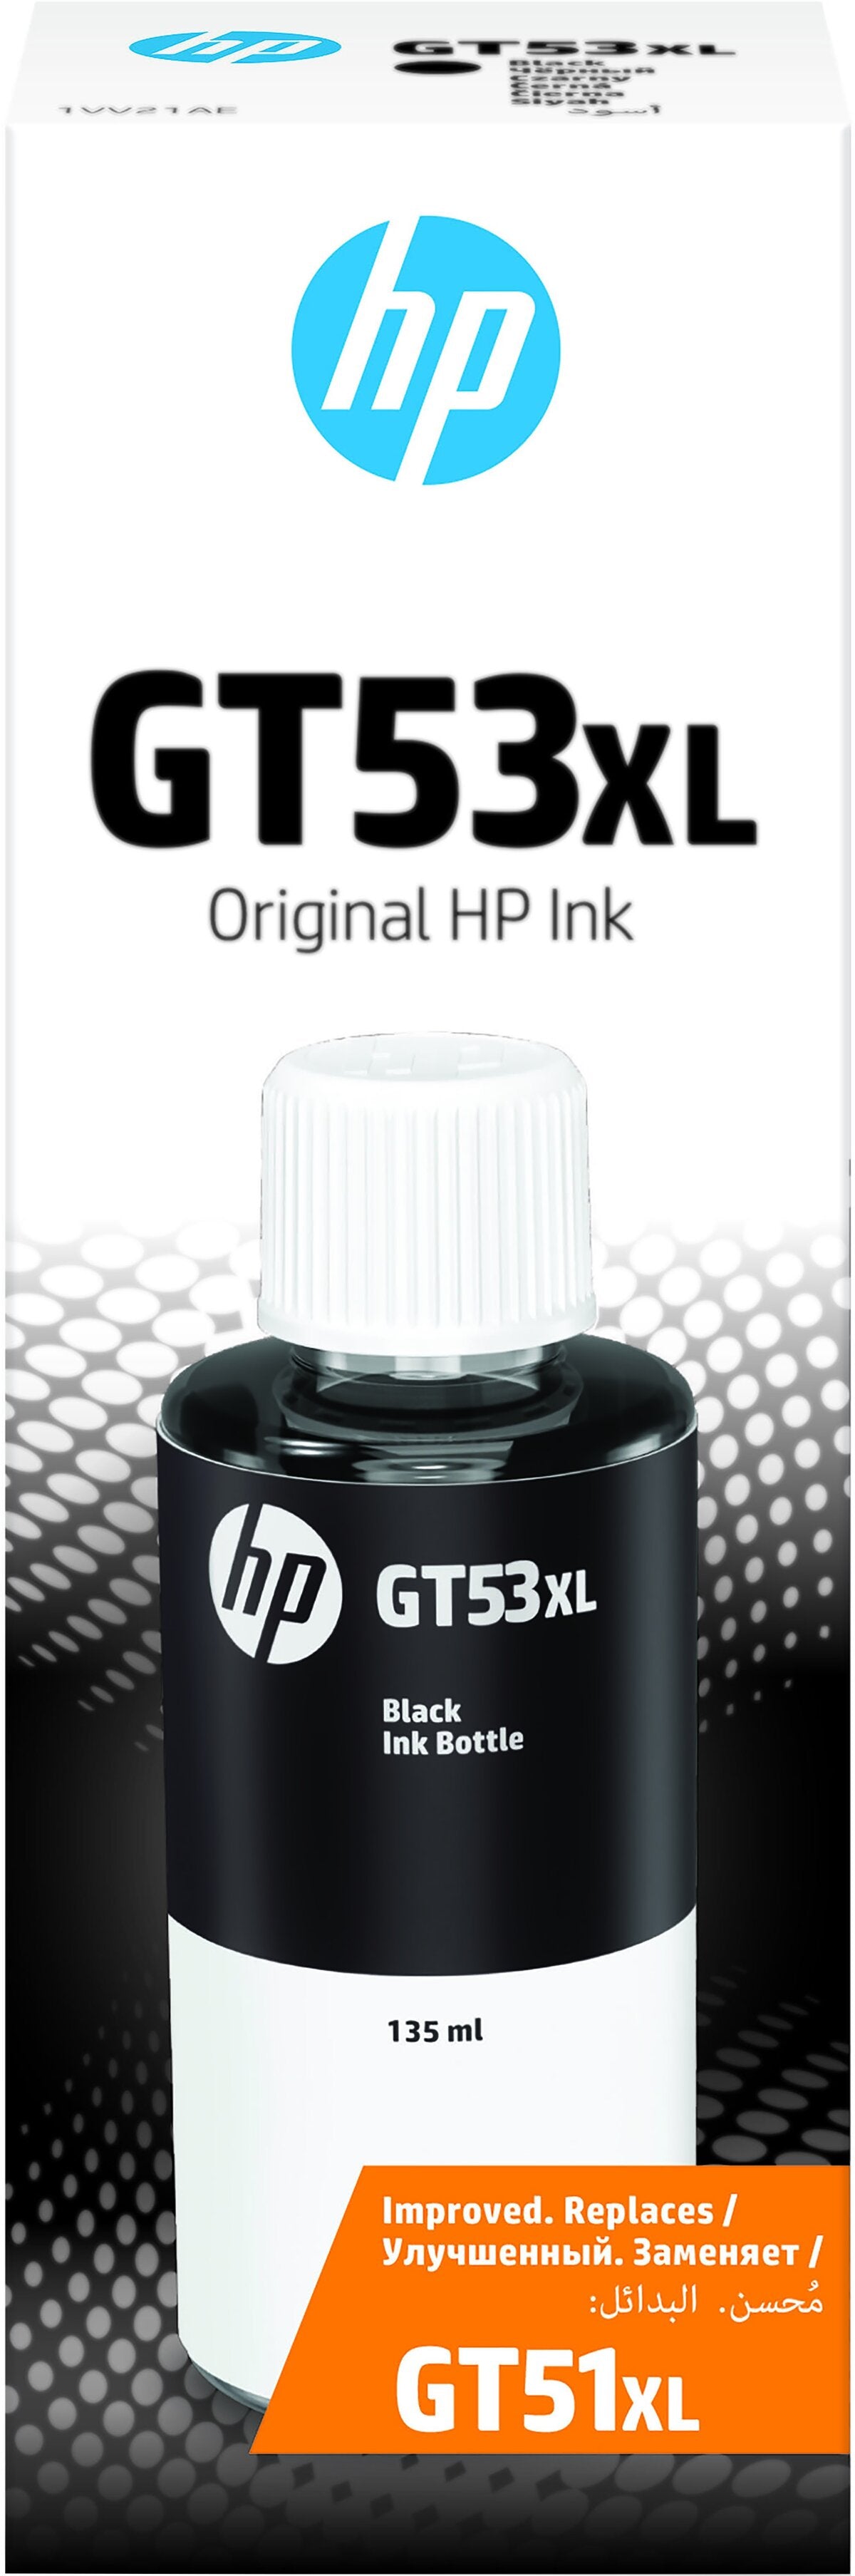 Tinteiro GT53XL 135ML BLACK INK BOTTLE 415 INK TANK